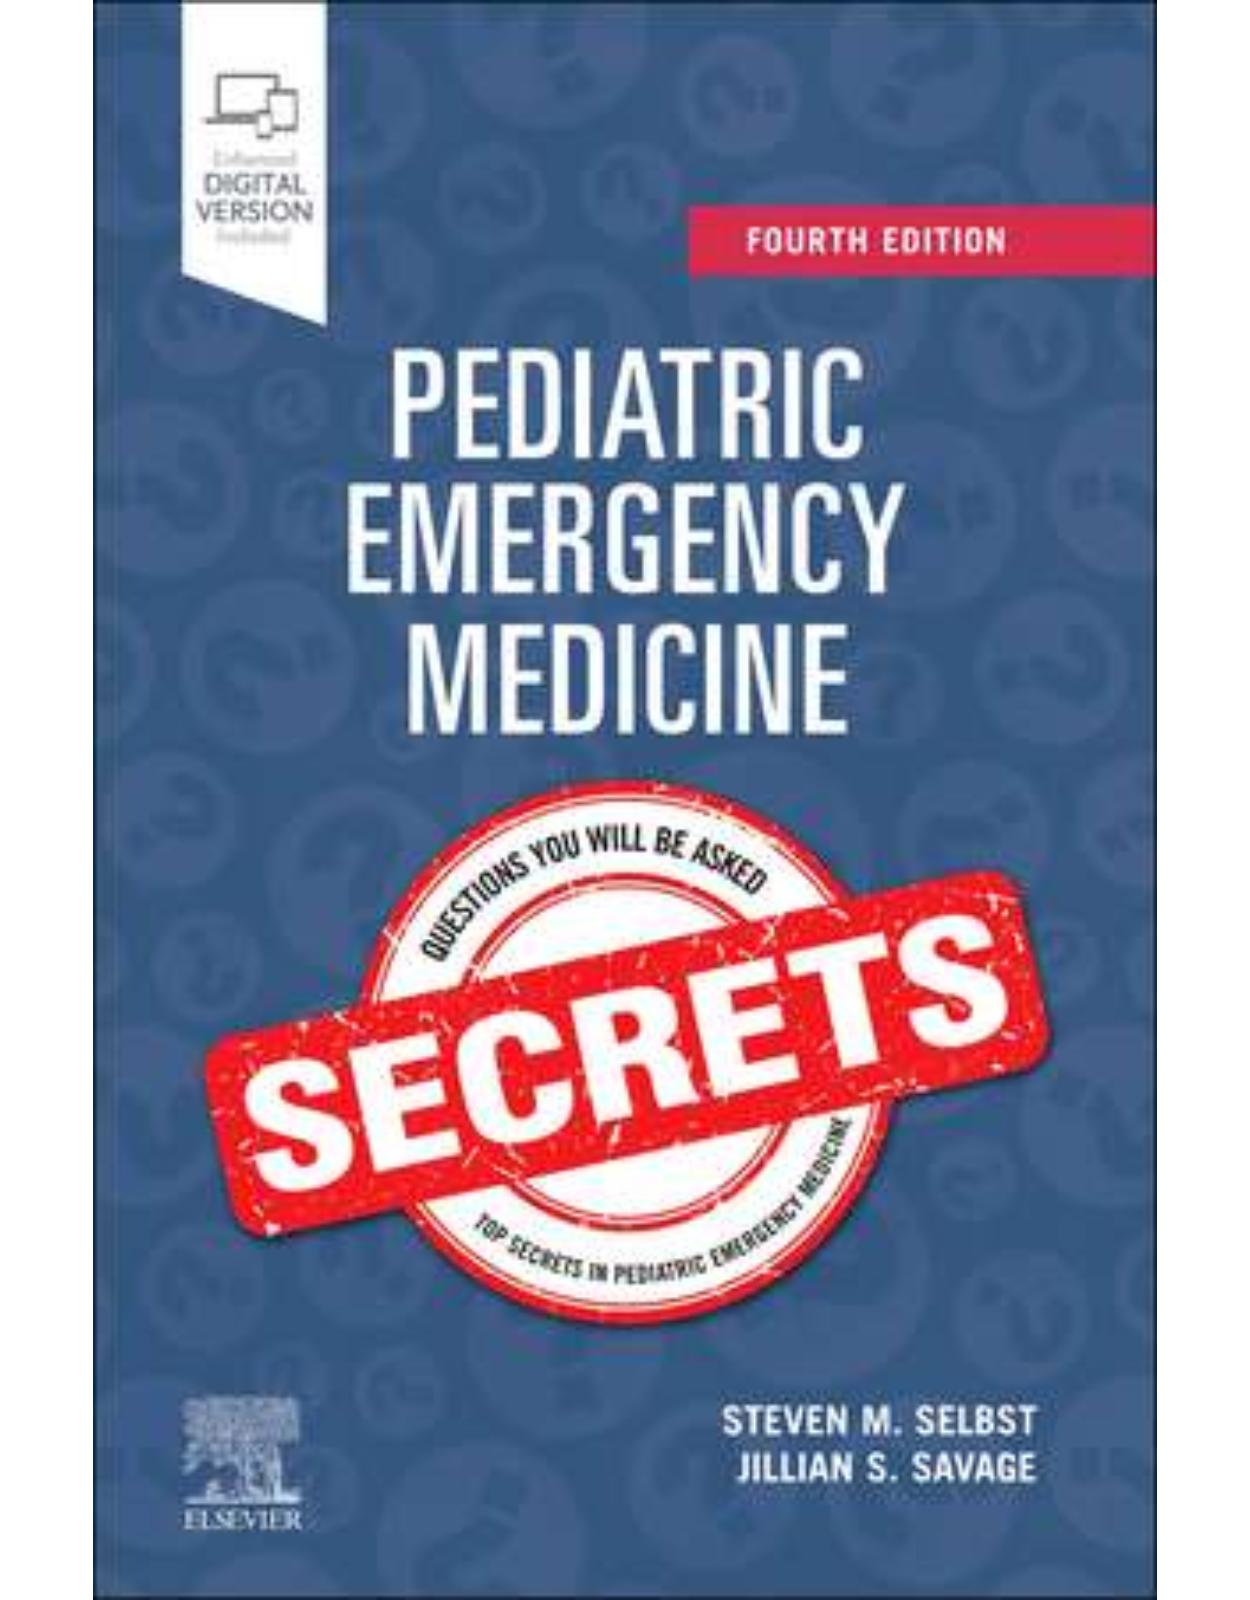 Pediatric Emergency Medicine Secrets, 4th Edition